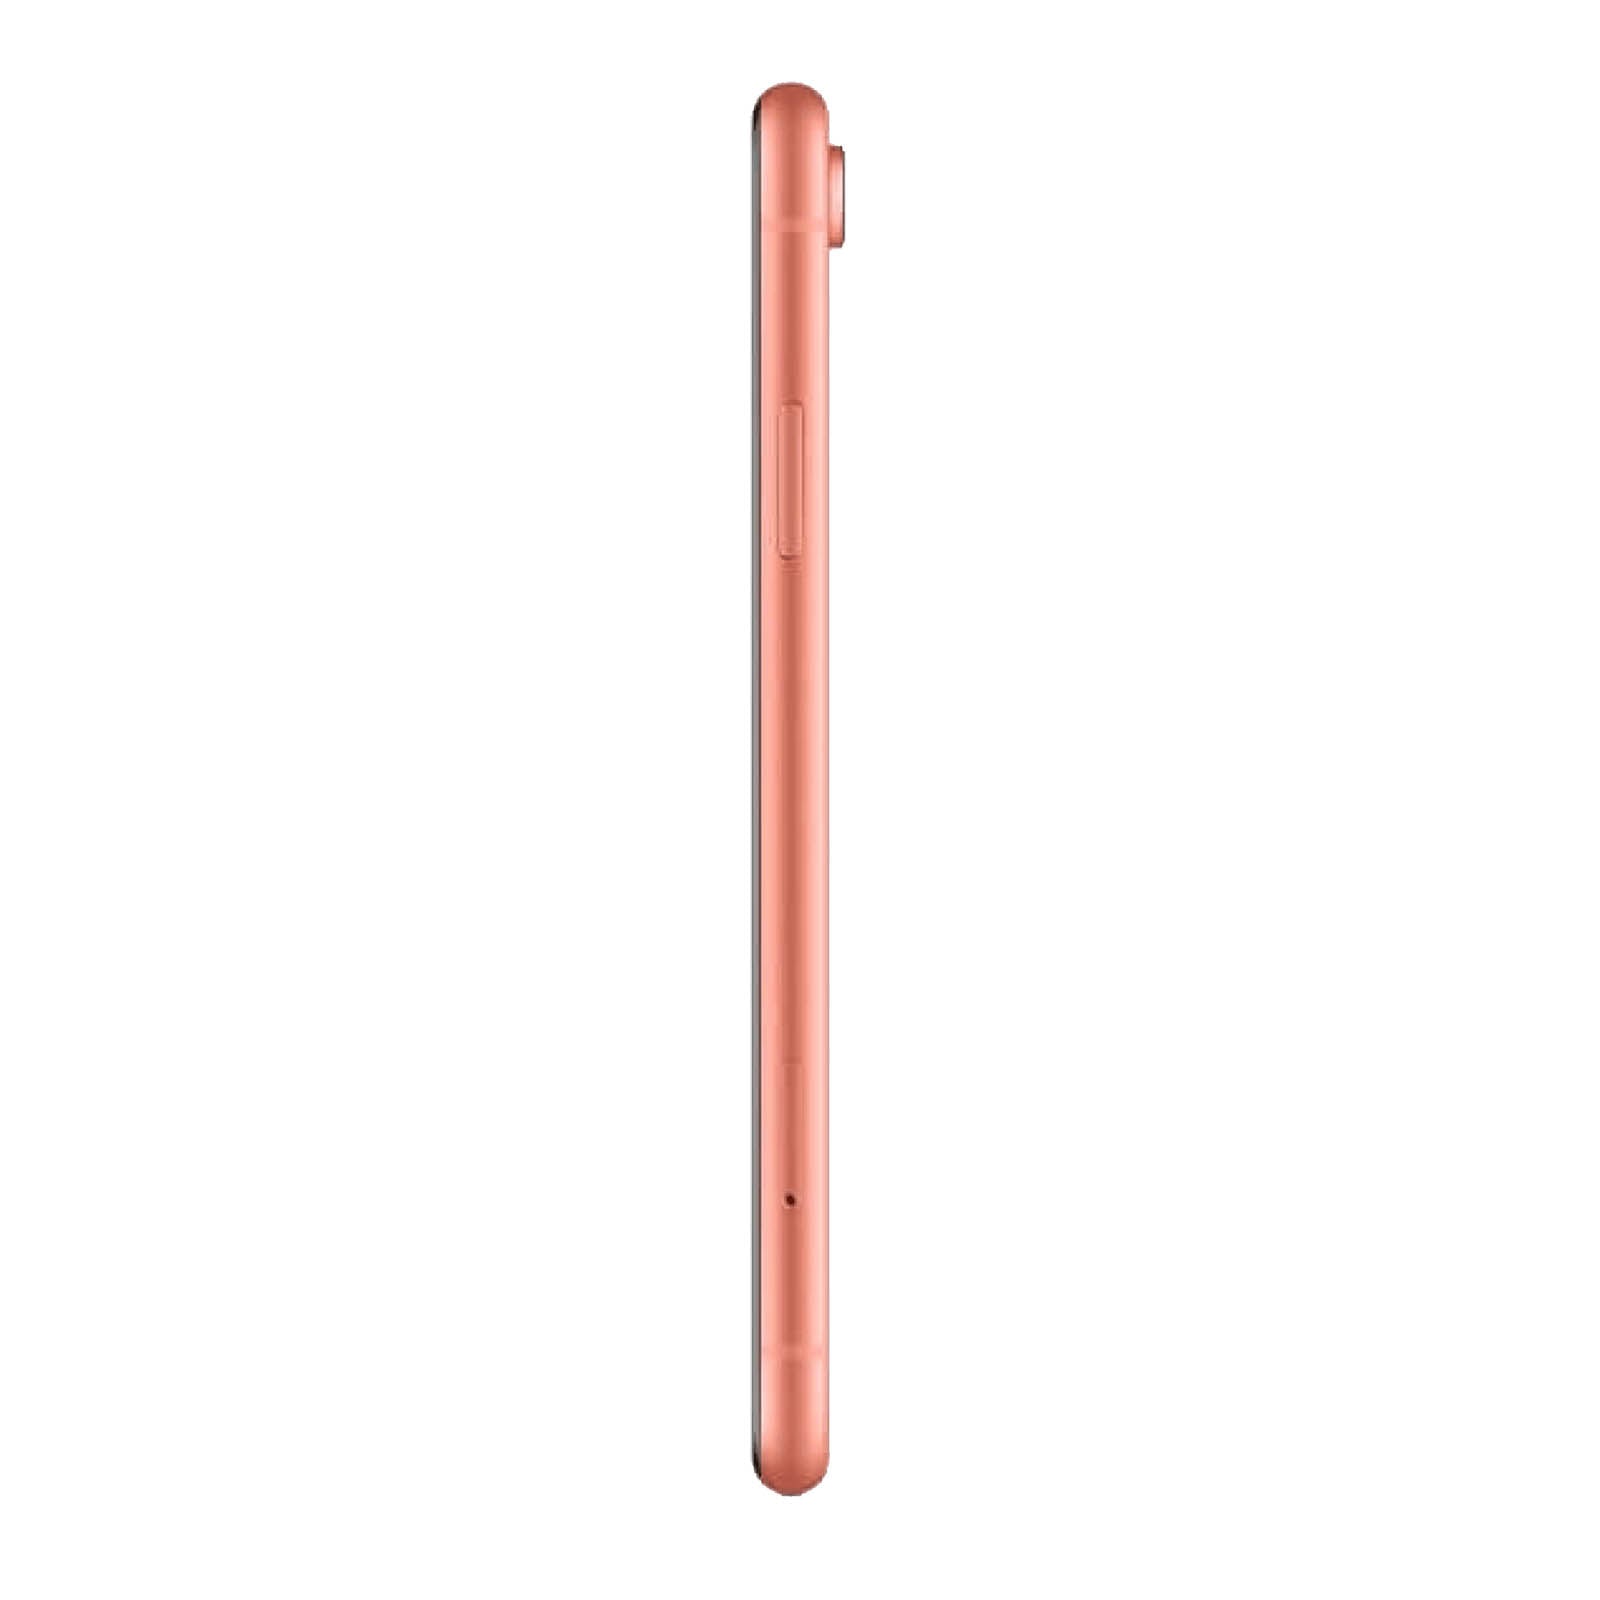 Apple iPhone XR 64GB Coral Pristine - Unlocked